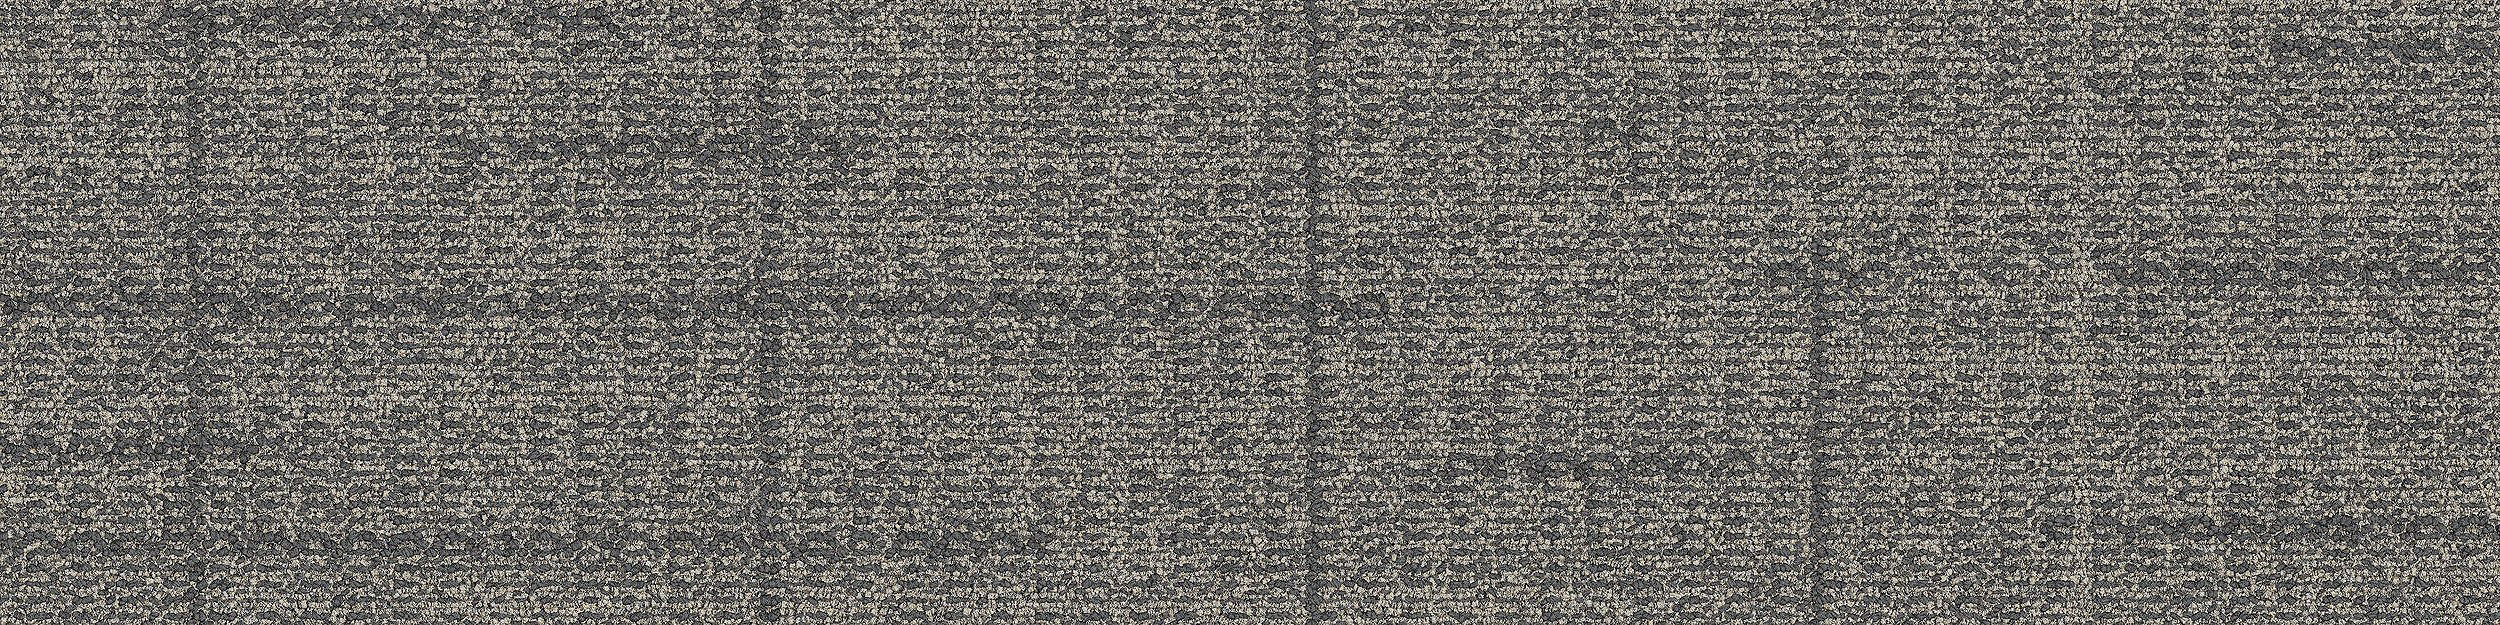 Open Air 401 Carpet Tile In Nickel numéro d’image 7